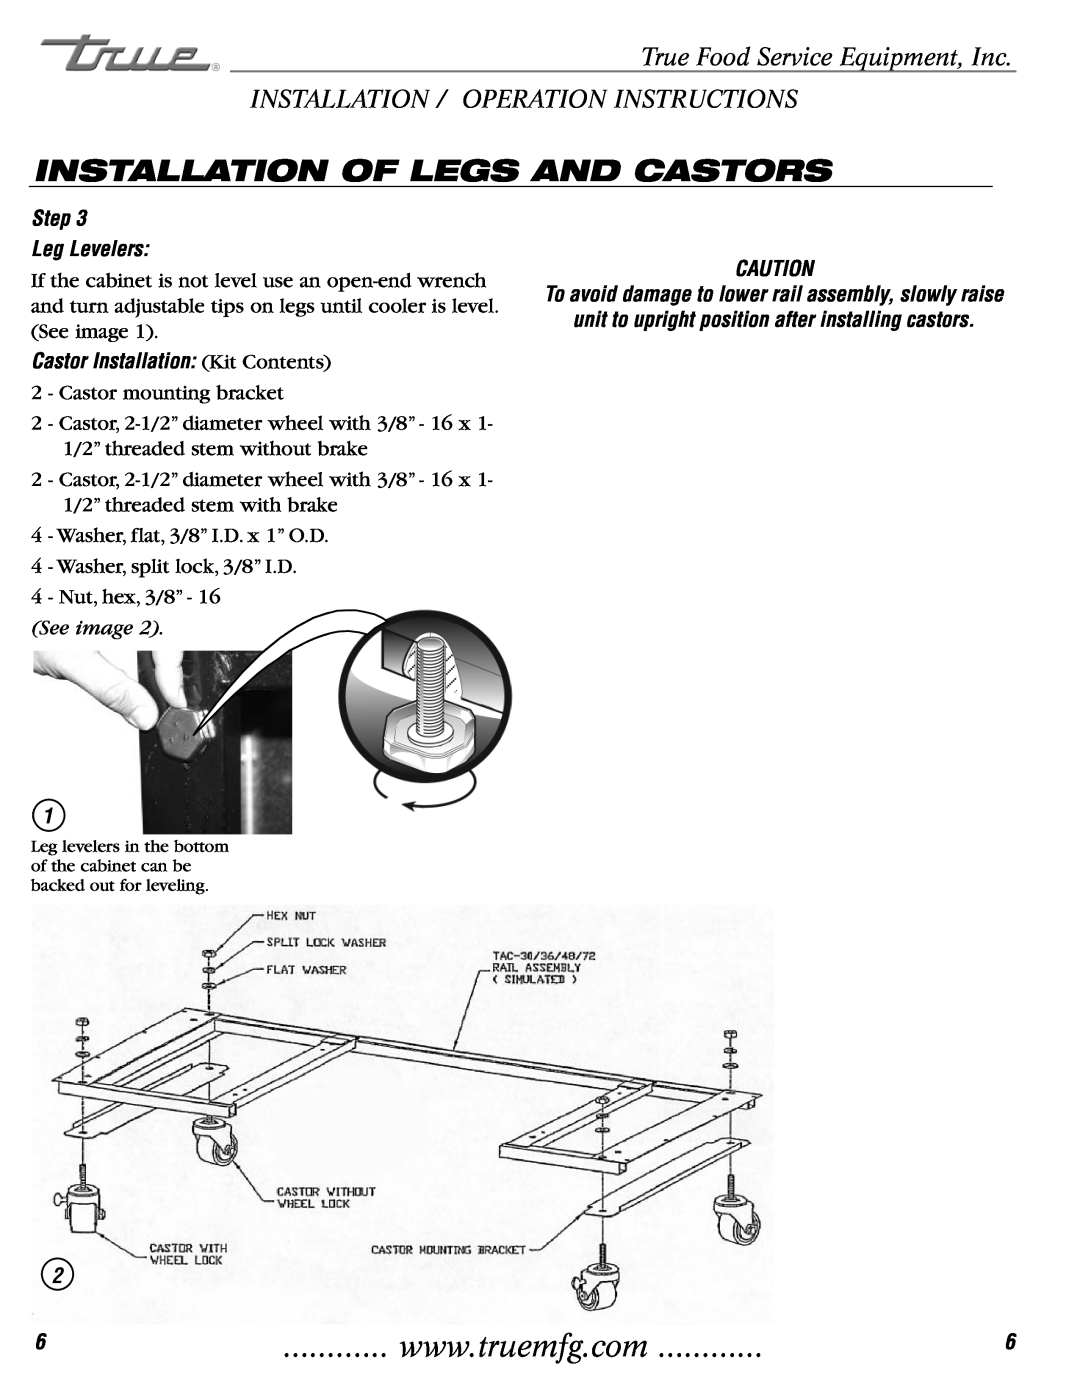 True Manufacturing Company TAC-30 Installation Of Legs And Castors, True Food Service Equipment, Inc, Step Leg Levelers 